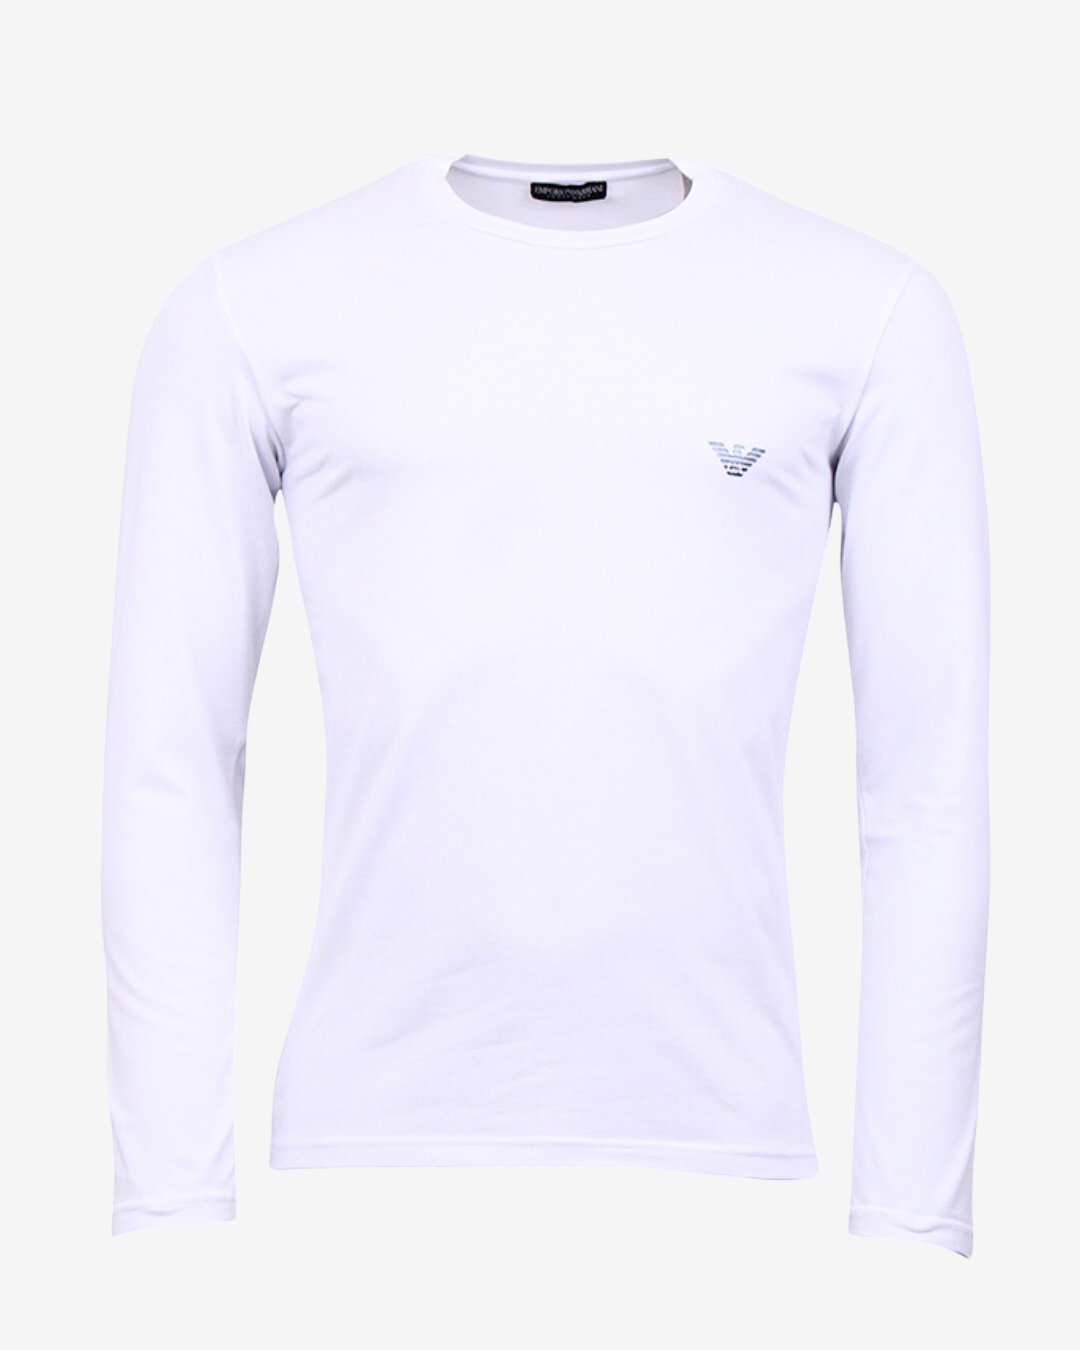 Se Armani Langærmet shiny logo t-shirt - Hvid - Str. XL - Modish.dk hos Modish.dk